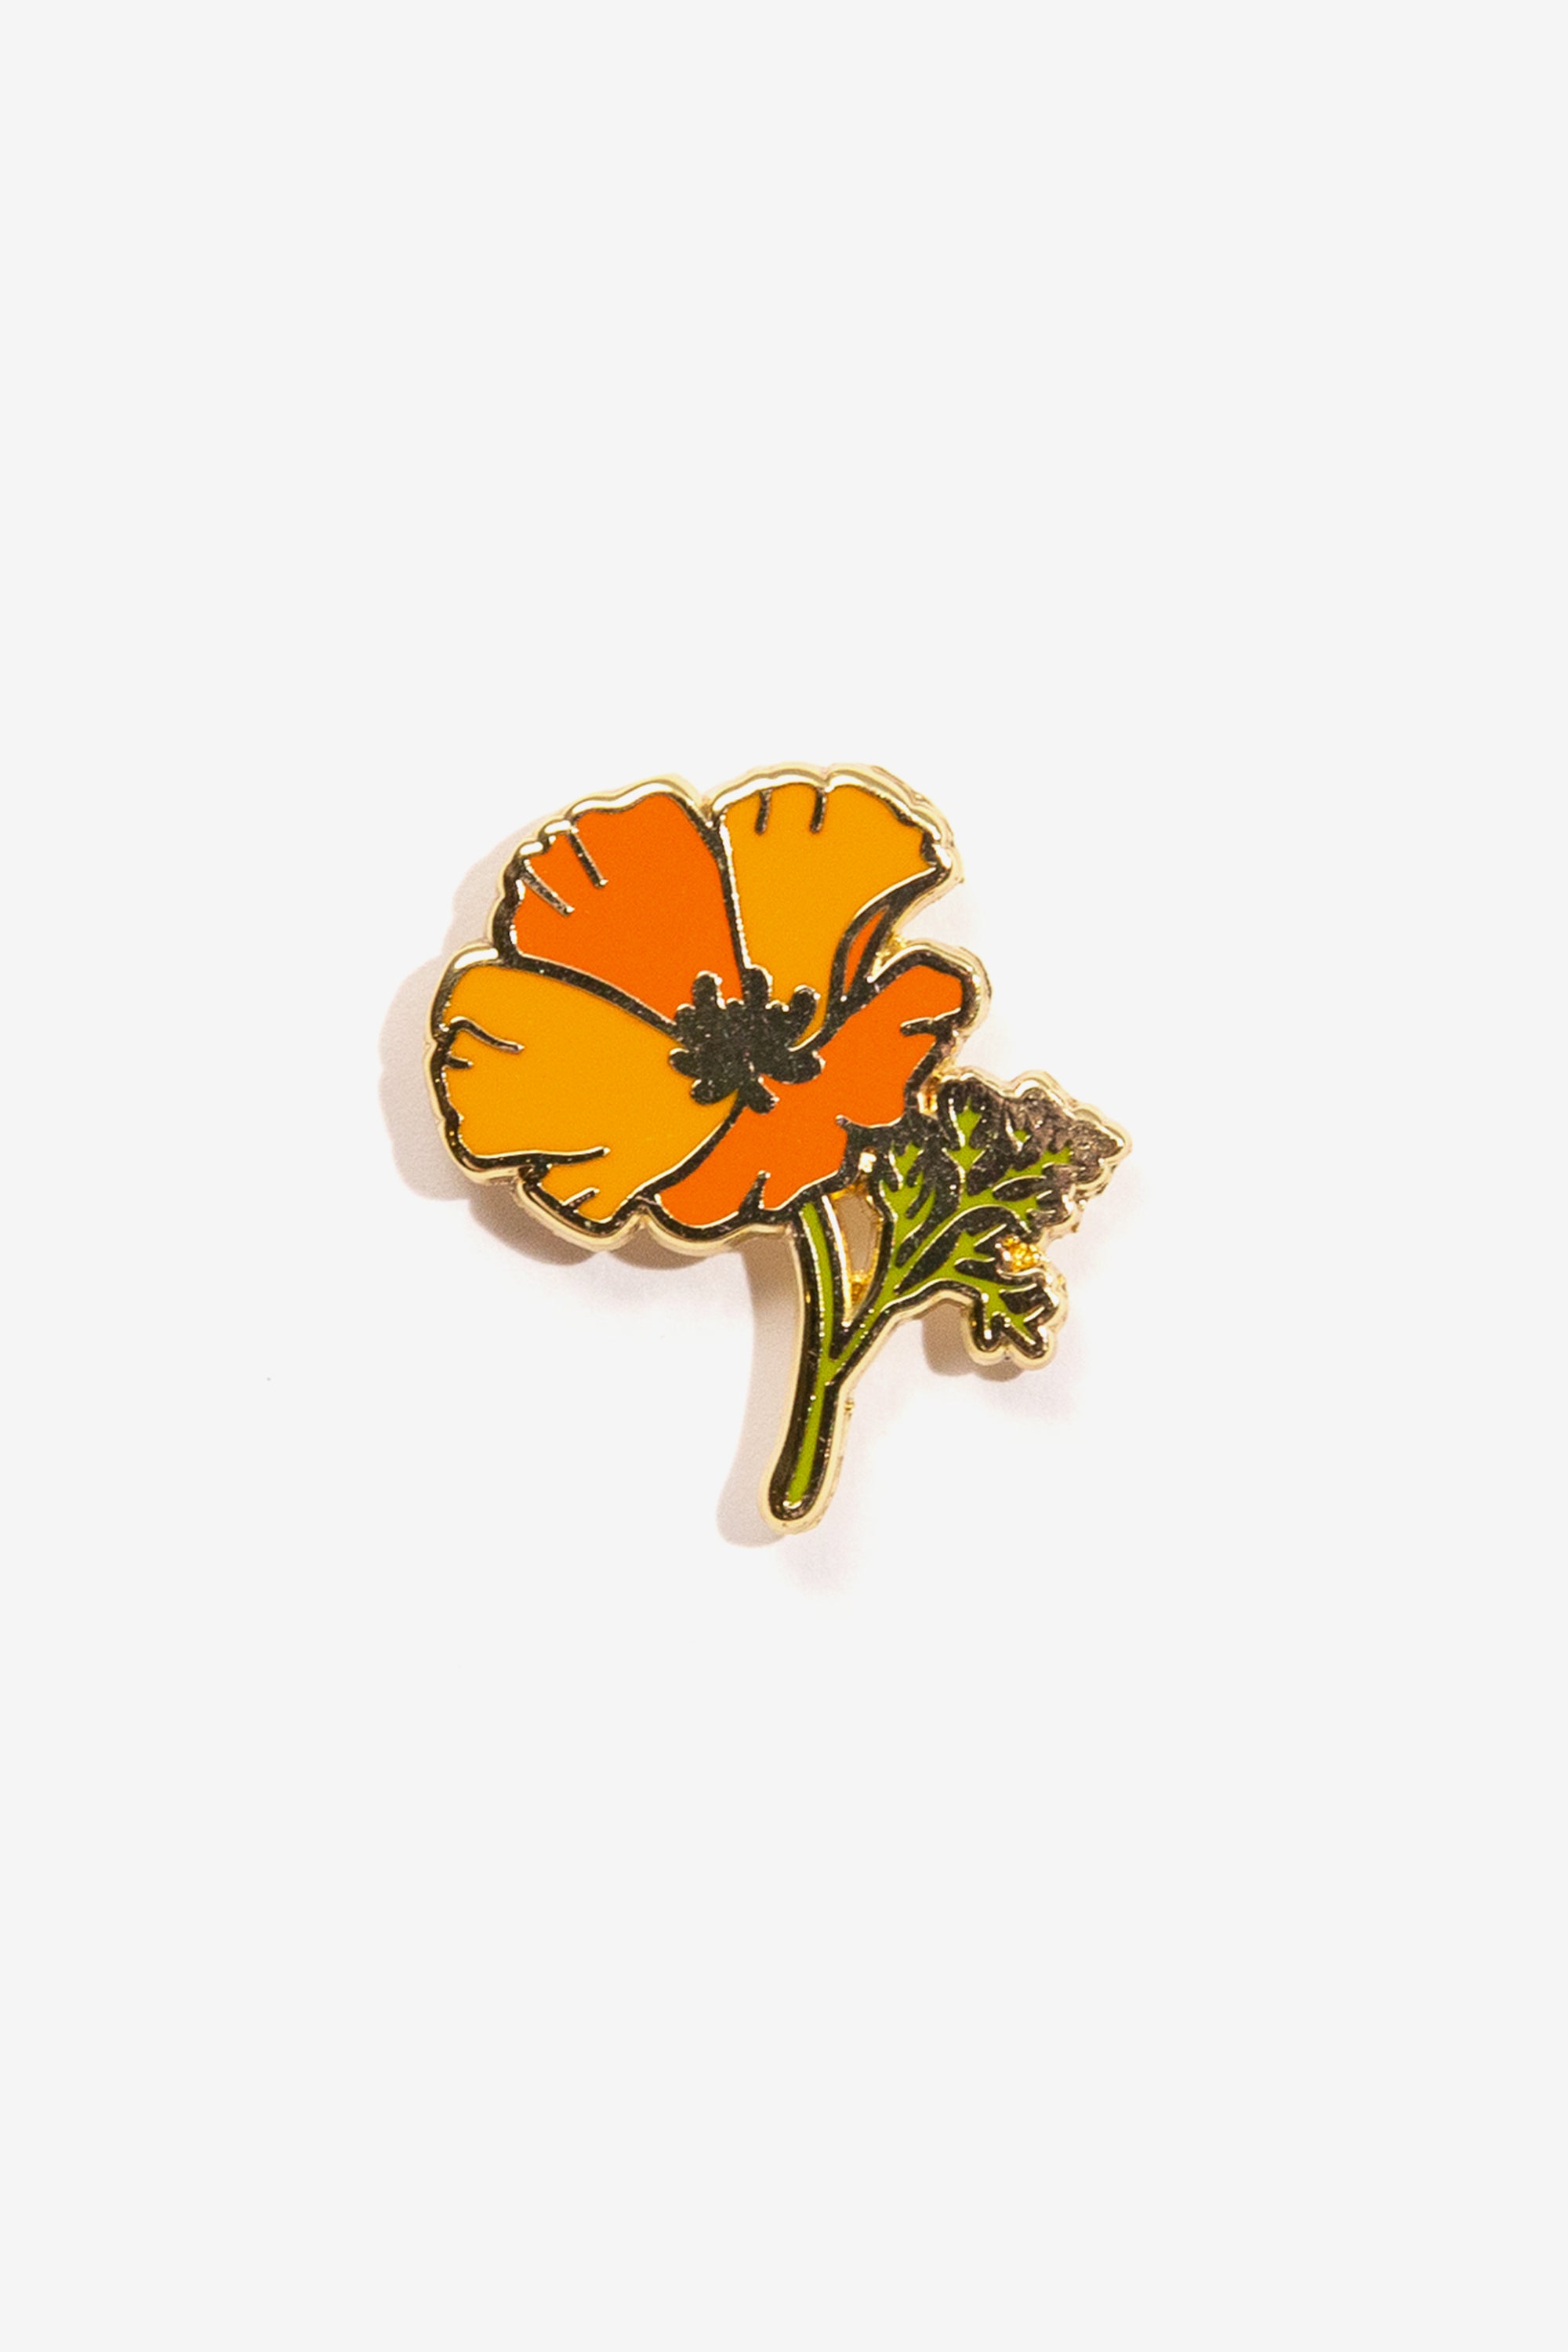 California Poppy Flower Enamel Pin Lapel